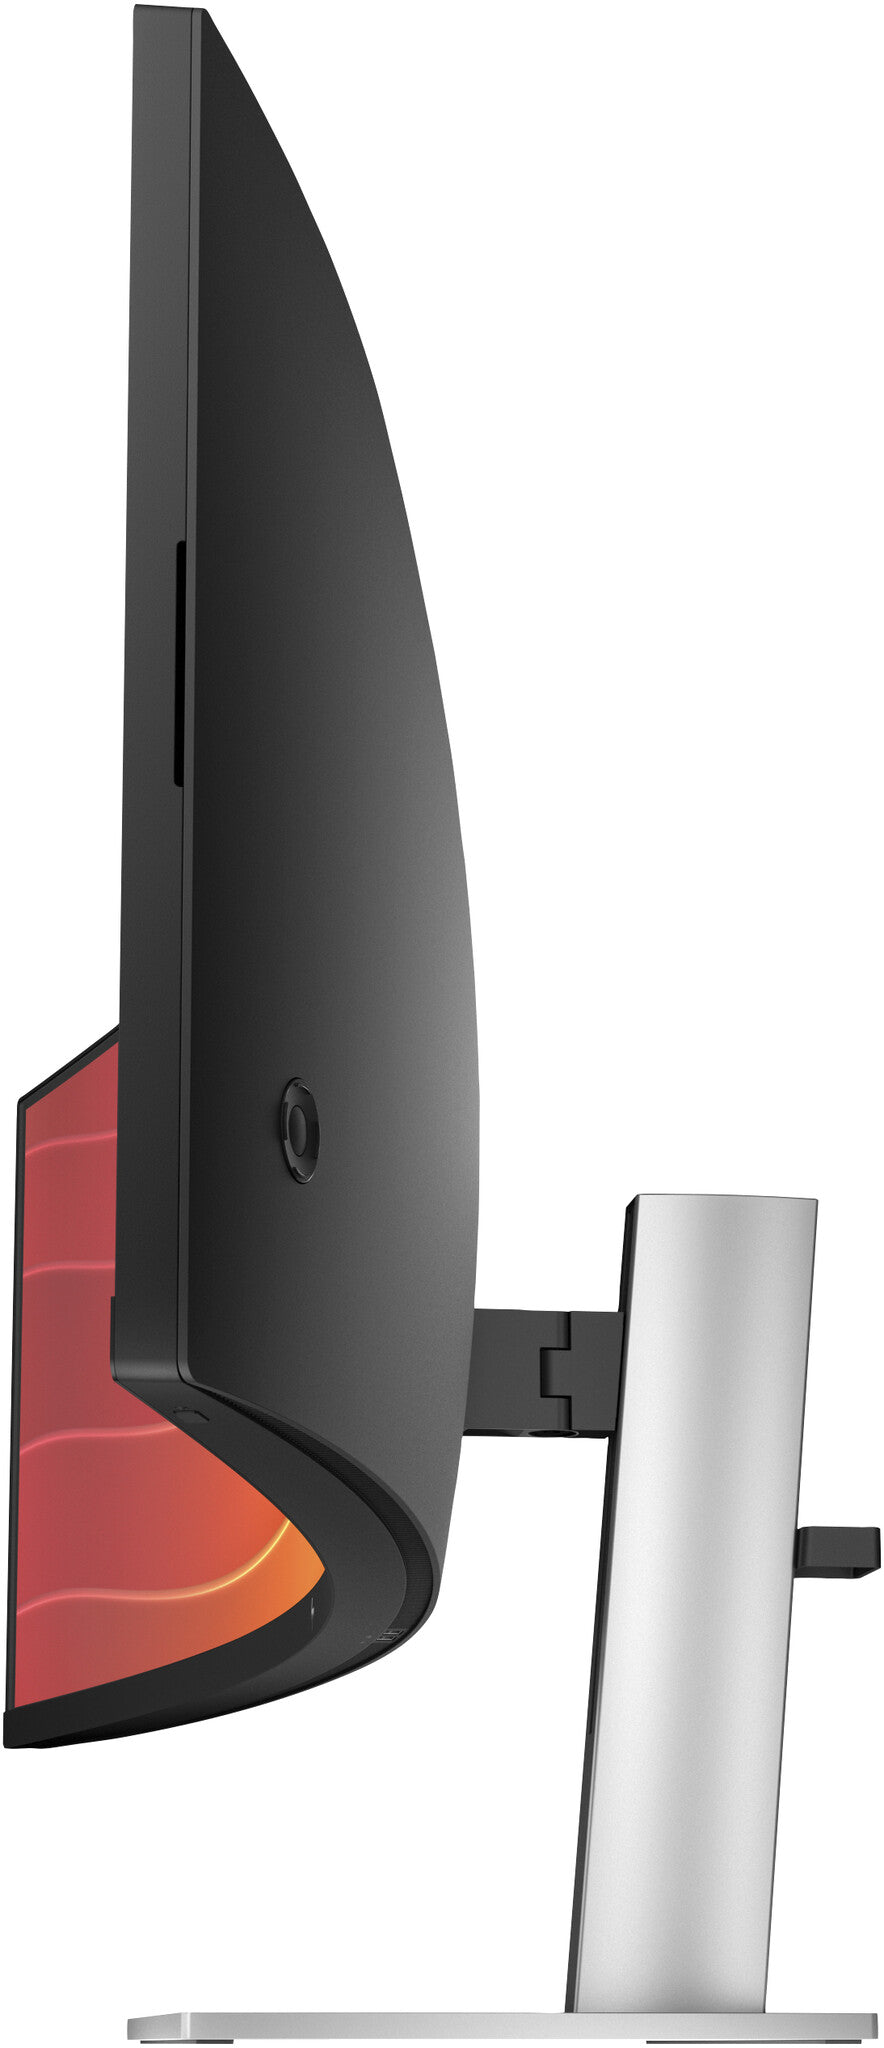 HP E45c G5 - 113 cm (44.5&quot;) - 5120 x 1440 pixels DQHD Monitor